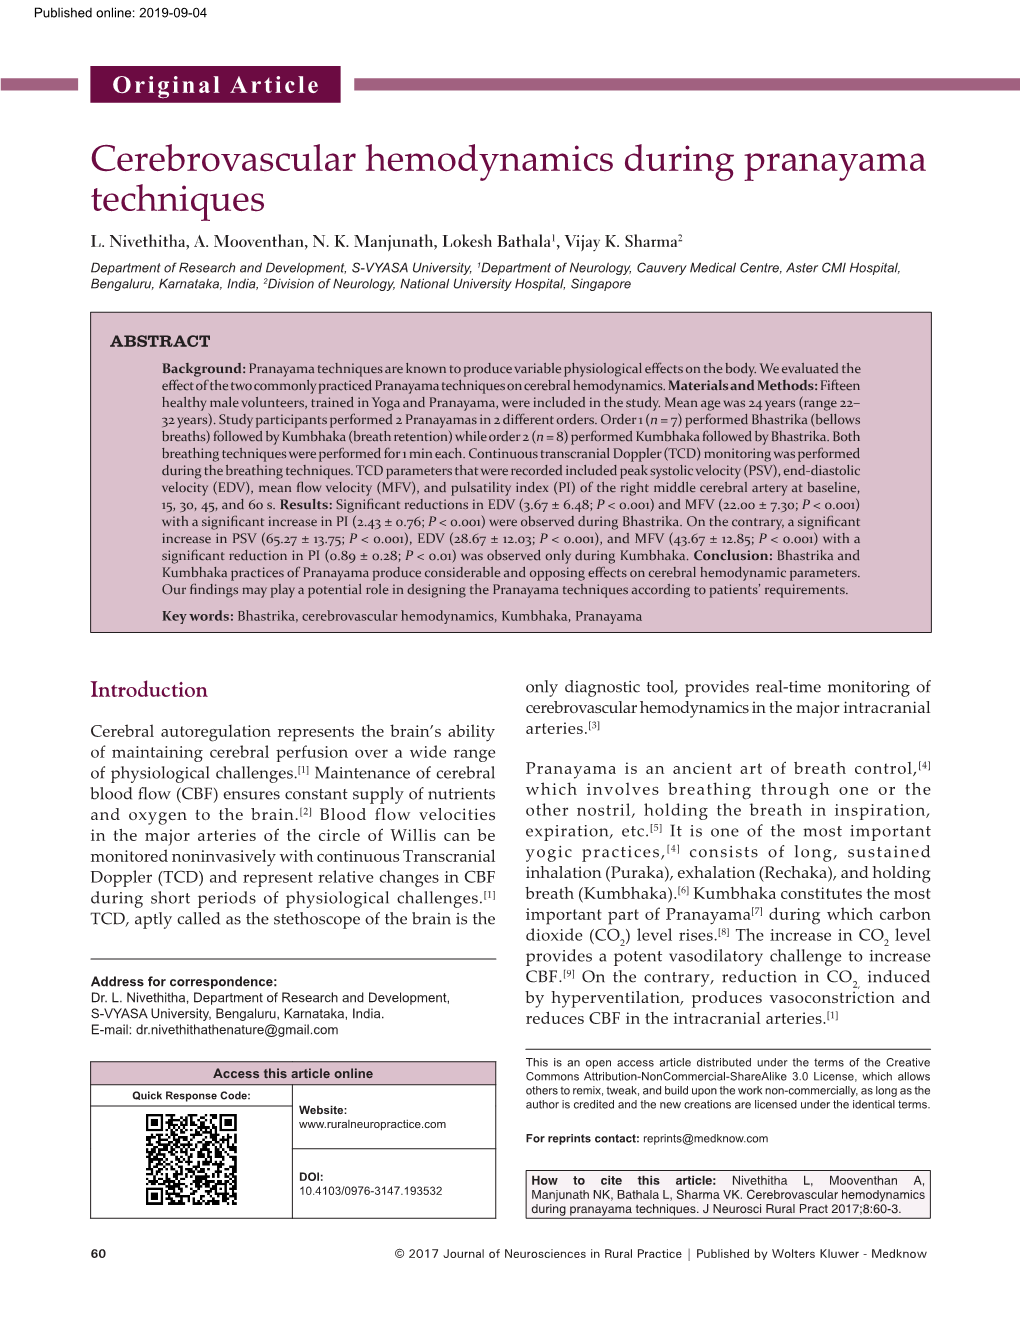 Cerebrovascular Hemodynamics During Pranayama Techniques L